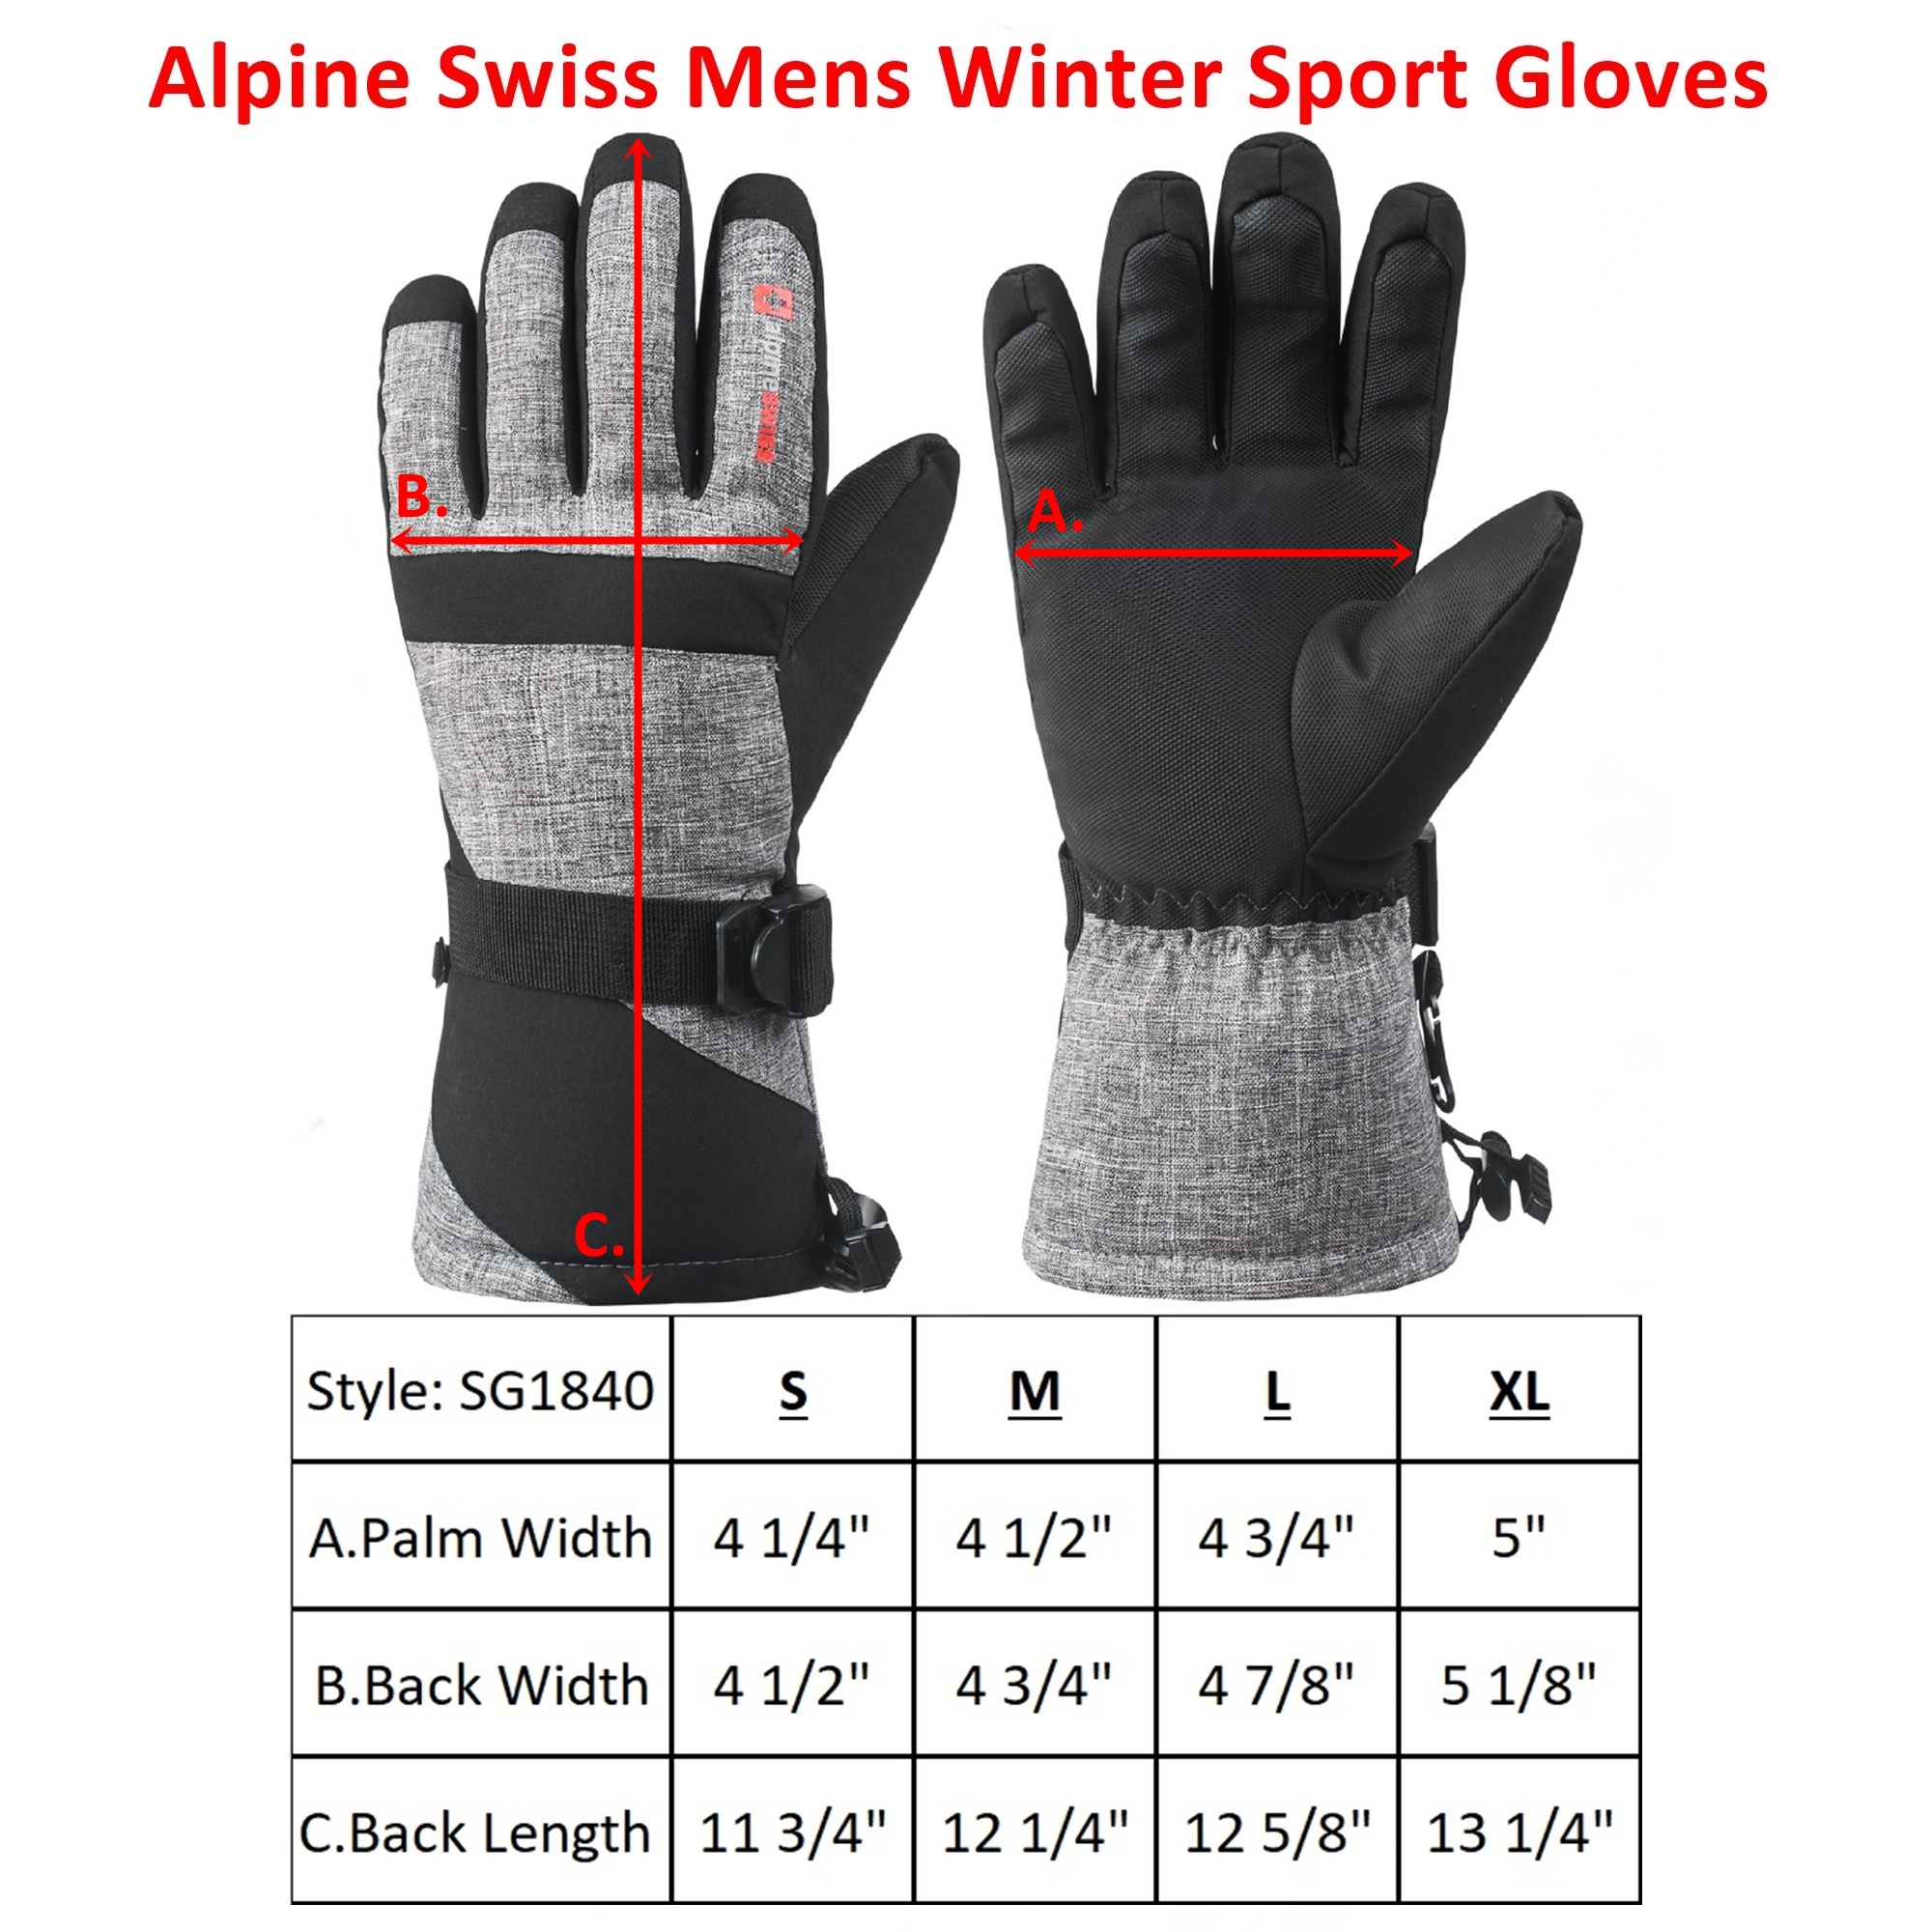 Alpine Swiss Mens Waterproof Gauntlet Snow Ski Gloves Winter Sport Snowboarding Windproof Warm 3M Thinsulate - image 5 of 7